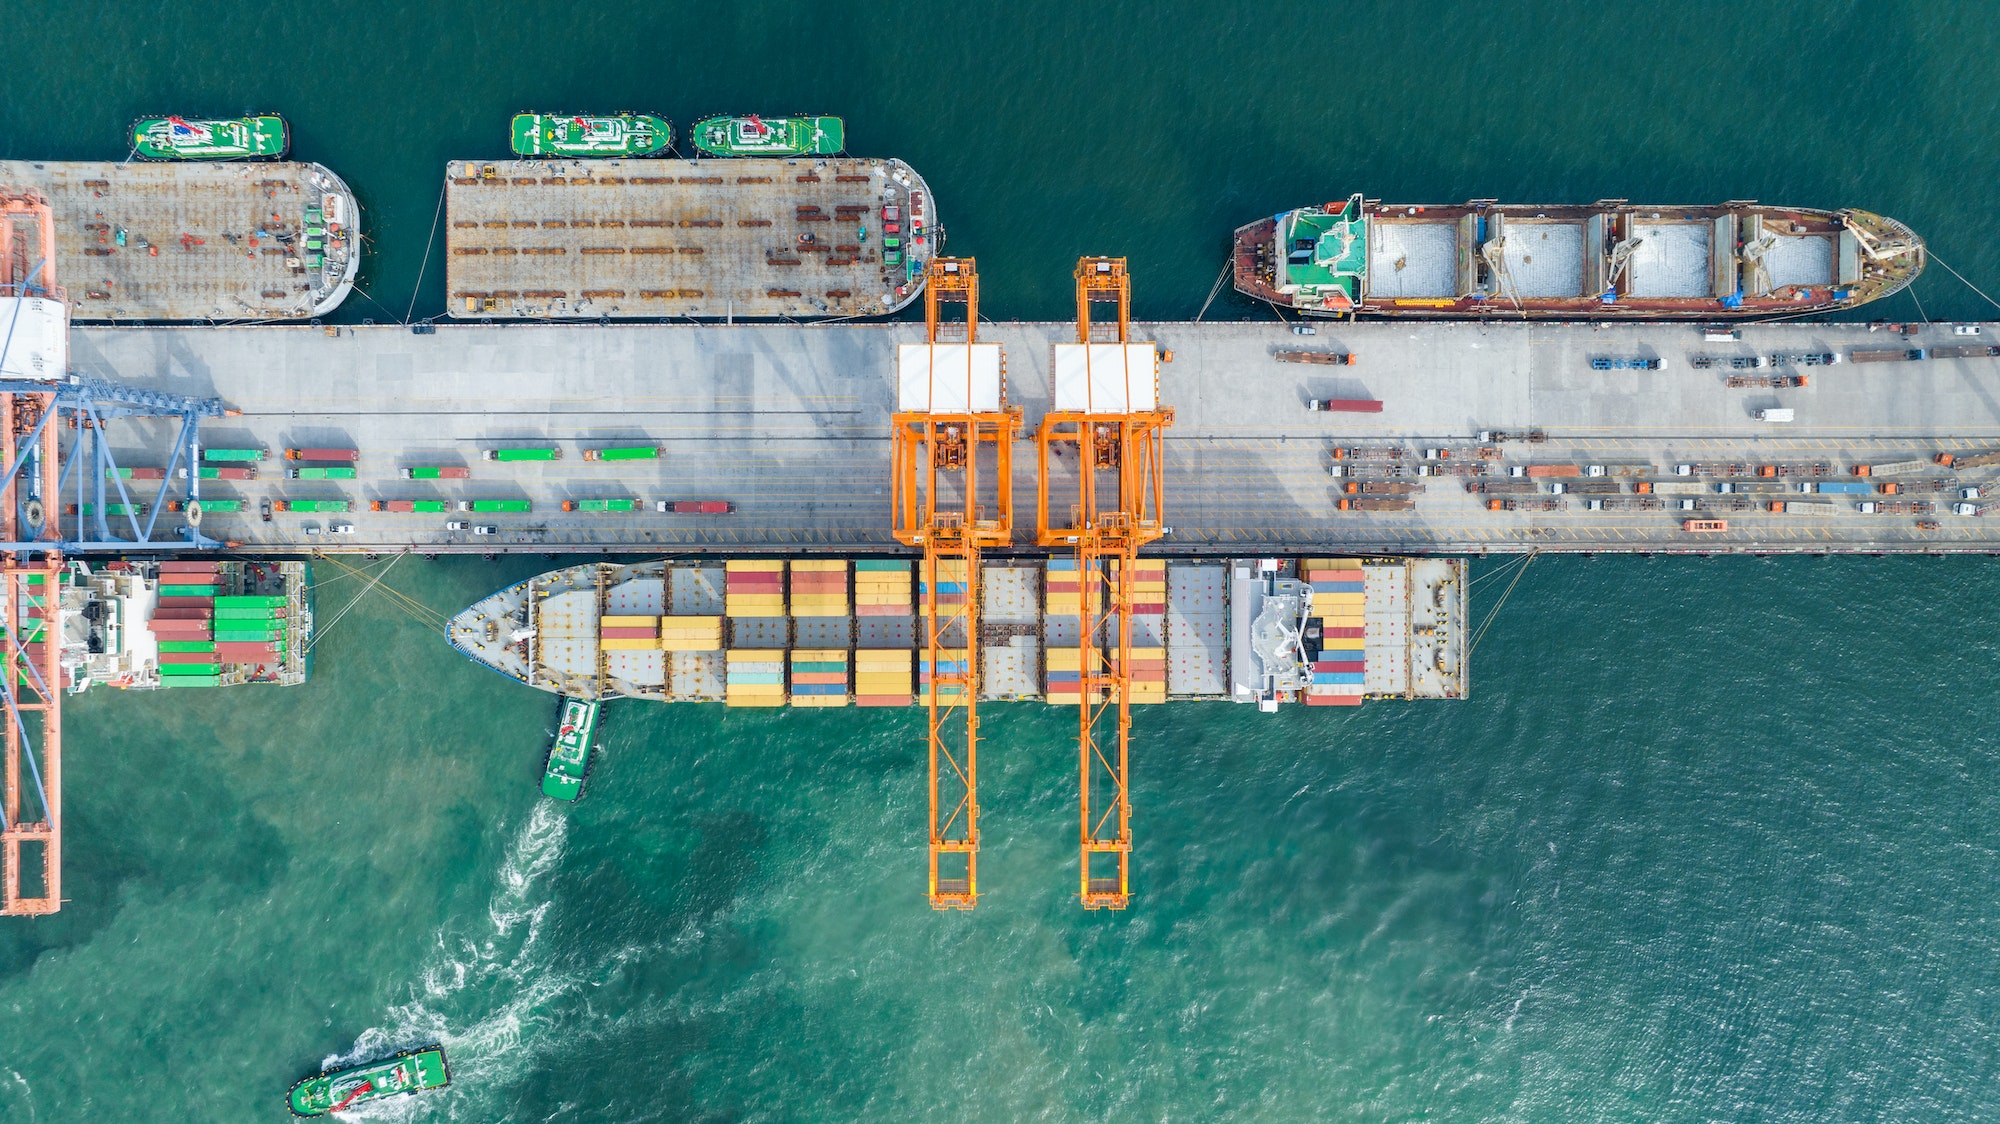 cargo-container-ship-load-container-box-to-cargo-ship-at-shipyard-bridge-of-container-sea.jpg